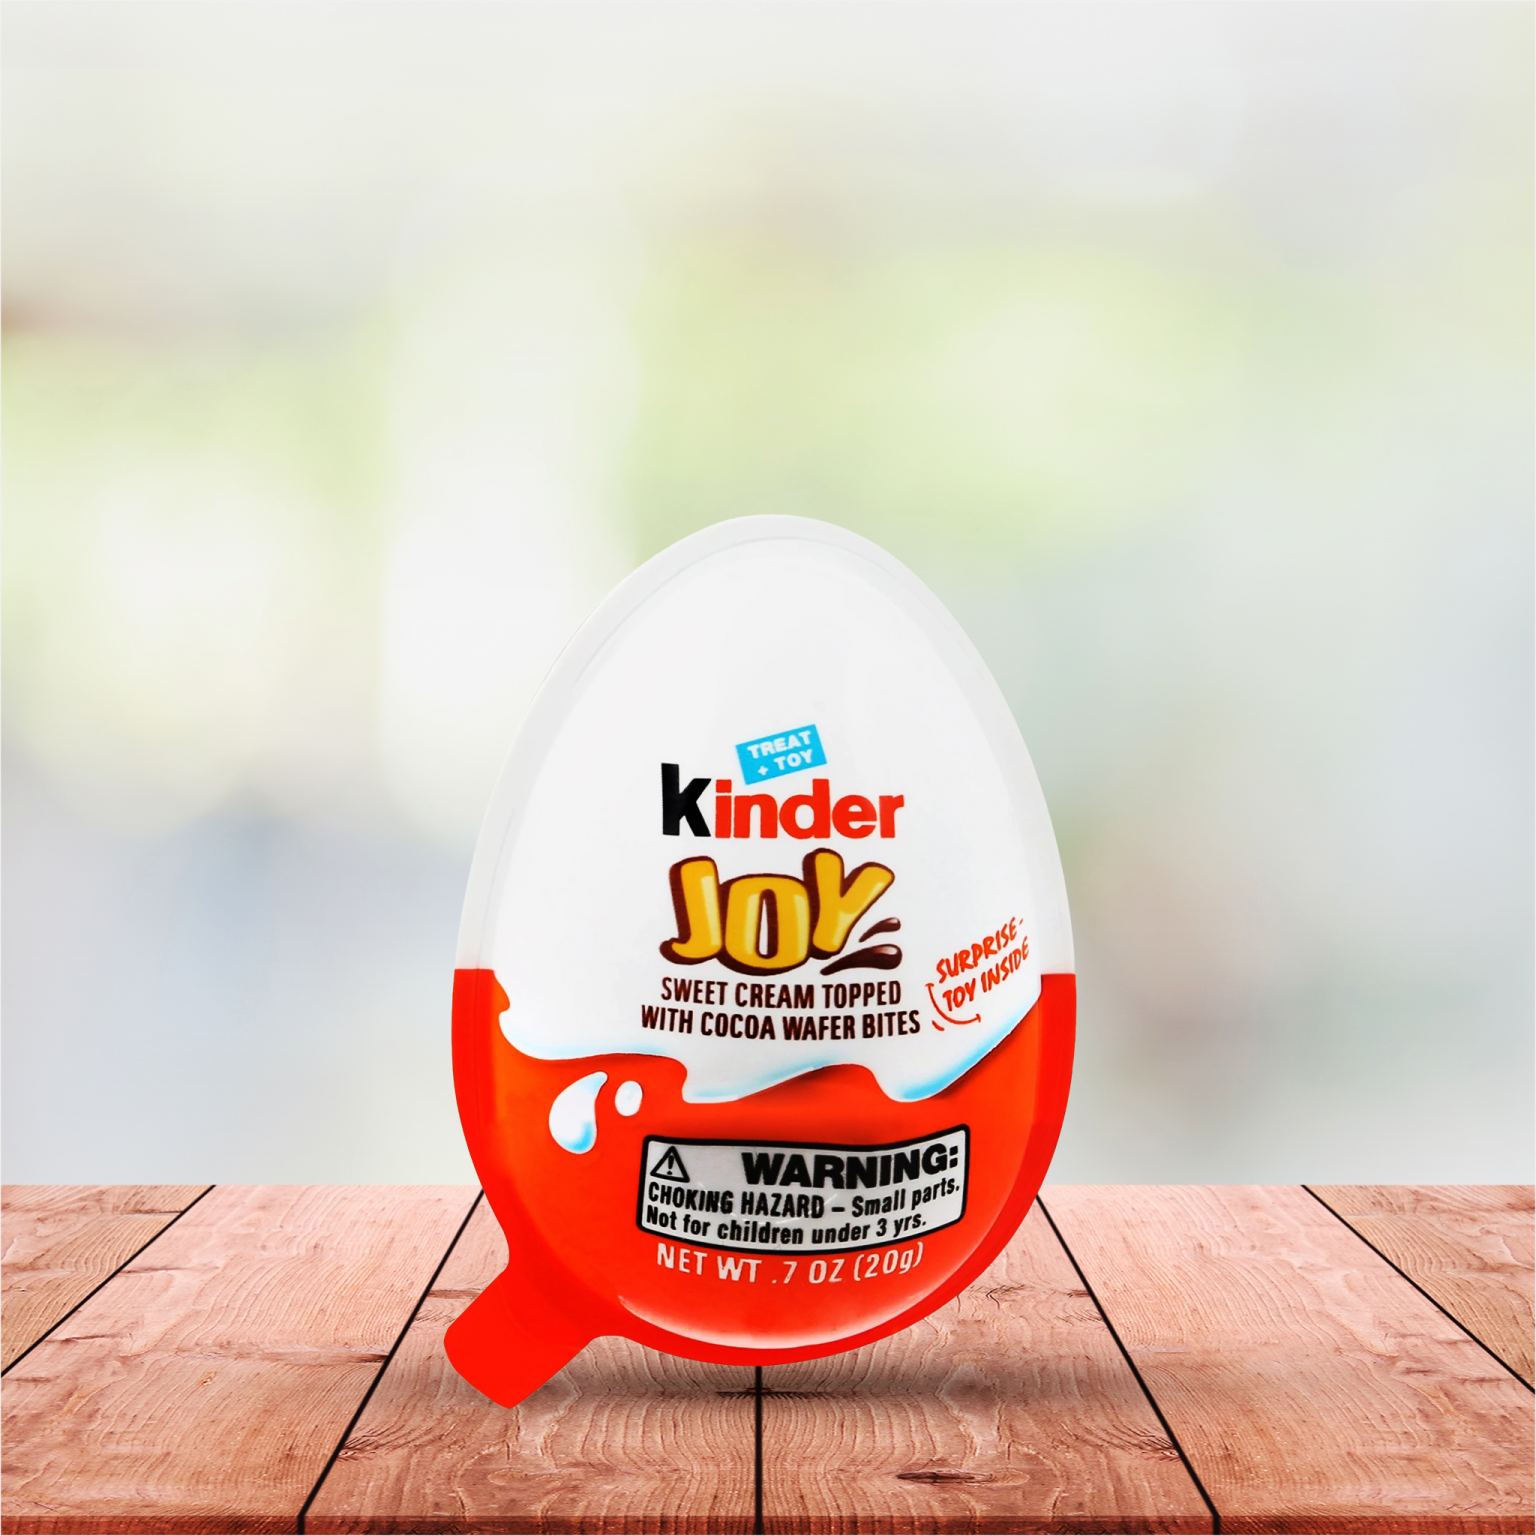 Kinder eggs -بيضة الكيندر -ماجيك ستور -magic stores